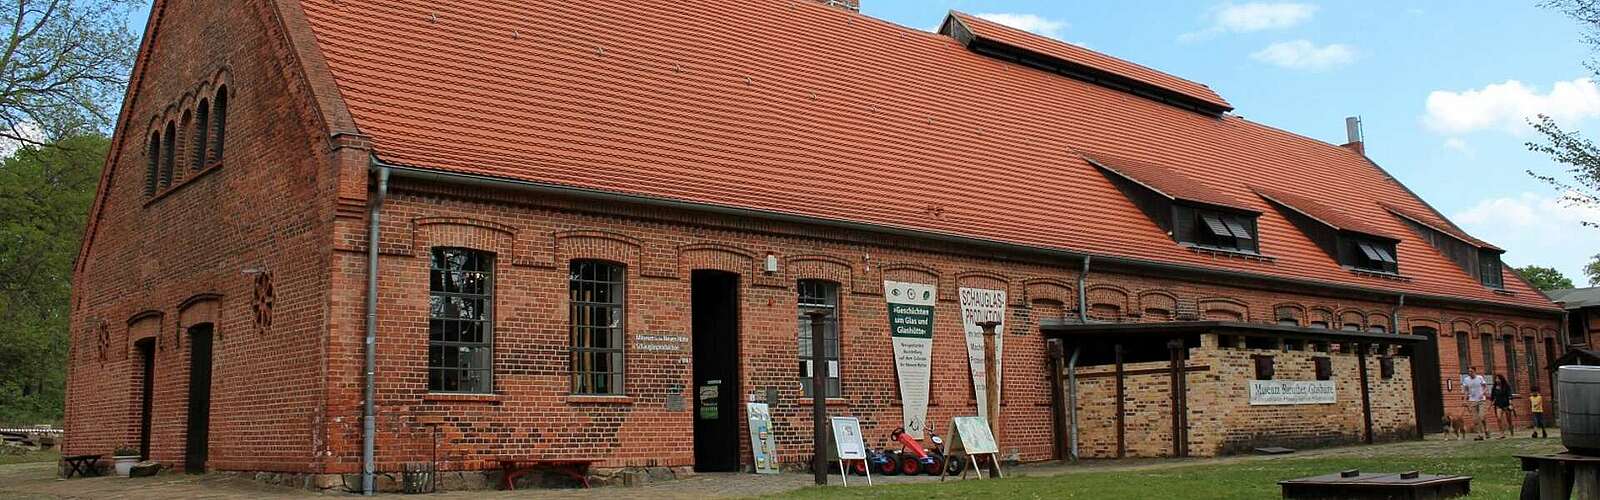 Museumsgebäude der Baruther Glashütte,
        
    

        Foto: Tourismusverband Fläming e.V./Alexandra Michel